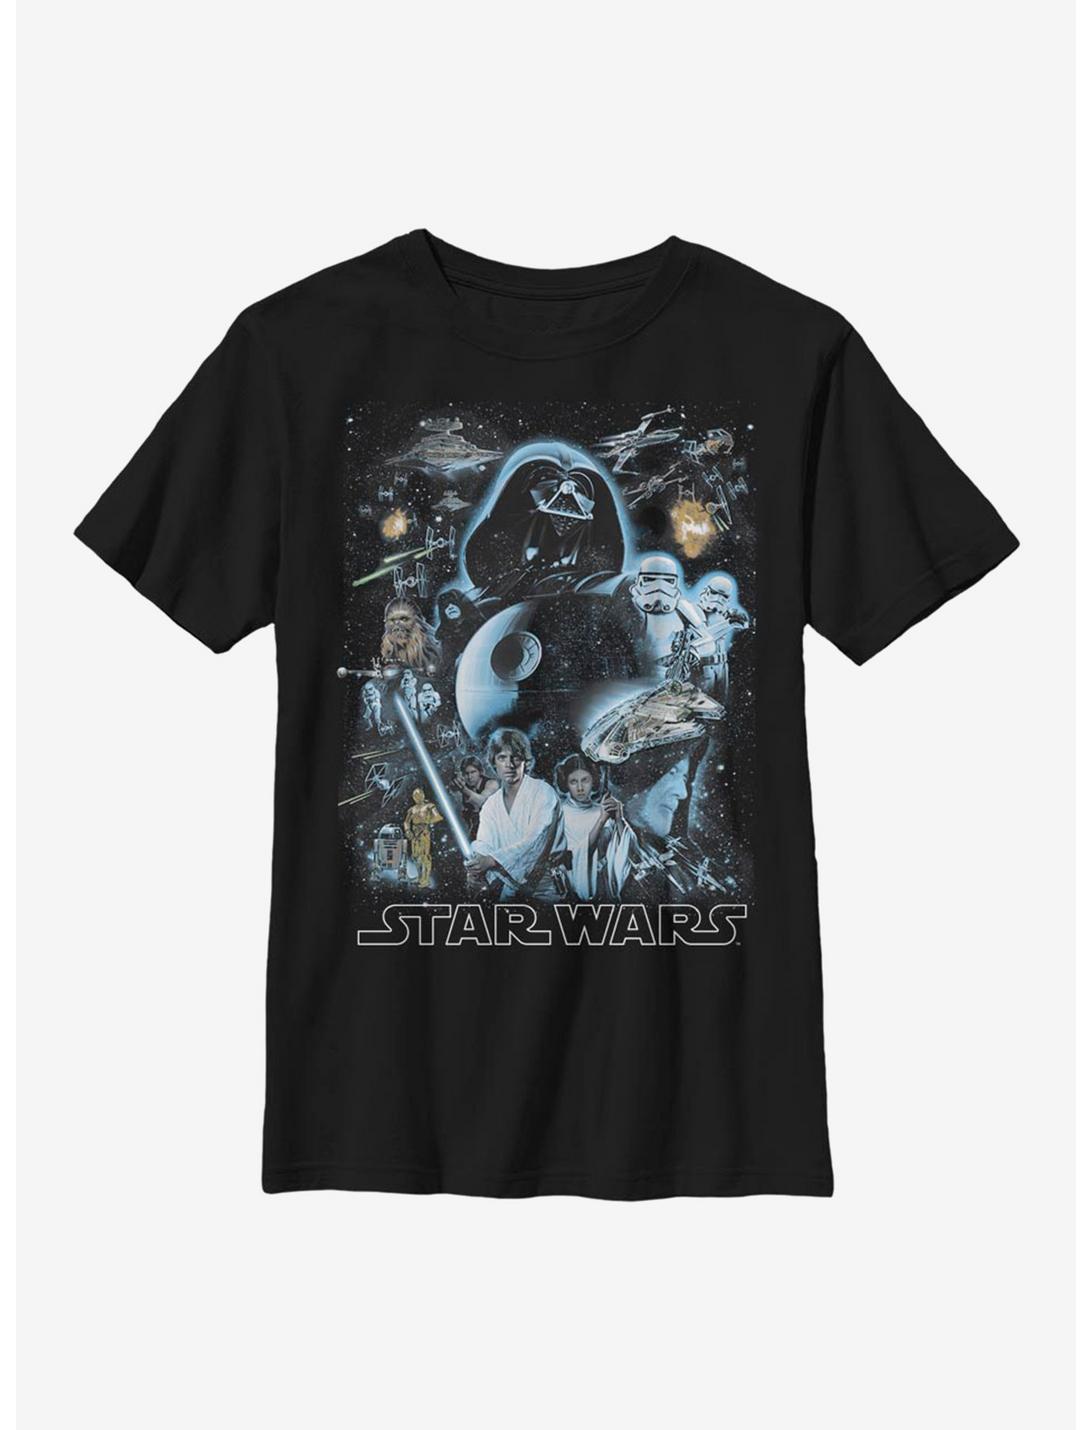 Star Wars Galaxy of Stars Youth T-Shirt, BLACK, hi-res